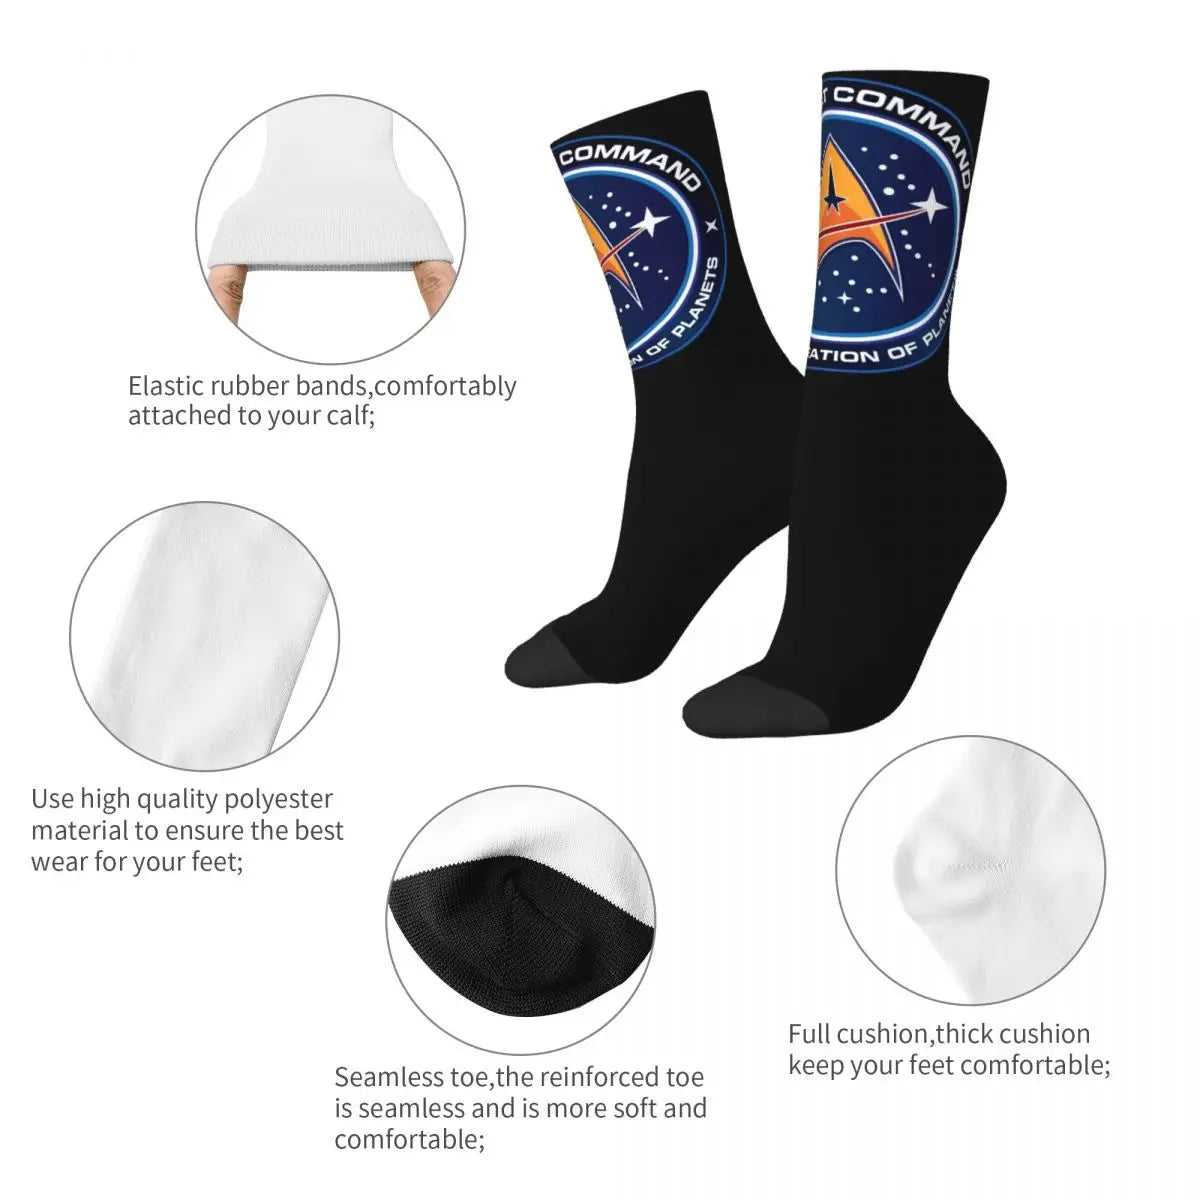 Star Treks Starfleet Theme Socks - All Seasons Cute Crew - Non-slip Best Gift for Space Movie Fans-Gray Black-One Size-